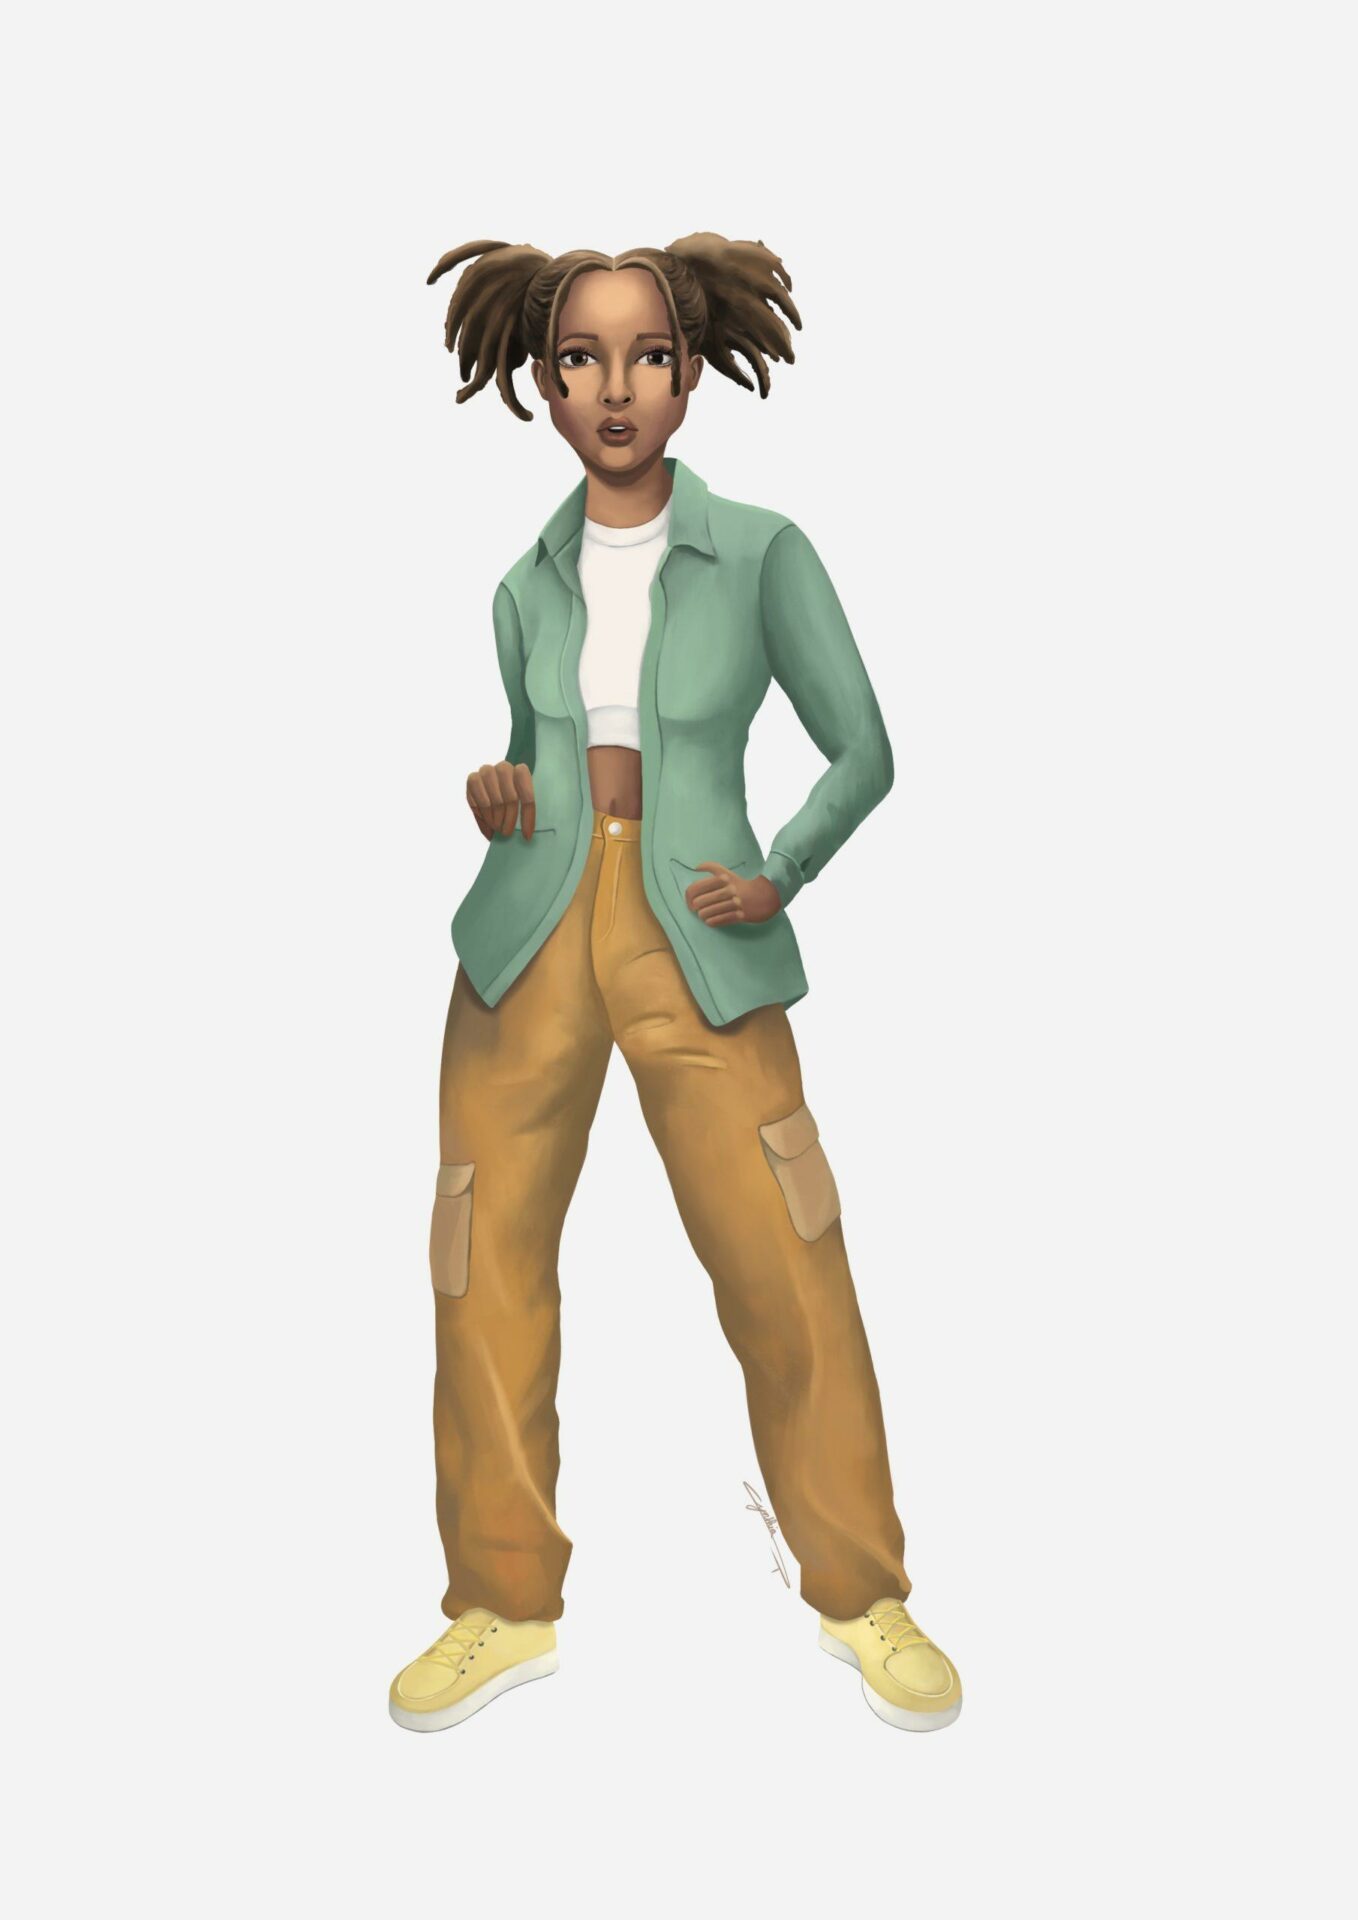 Personnage illustration jeune femme afro fait par l’illustratrice Cynthia Artstudio. Girl character